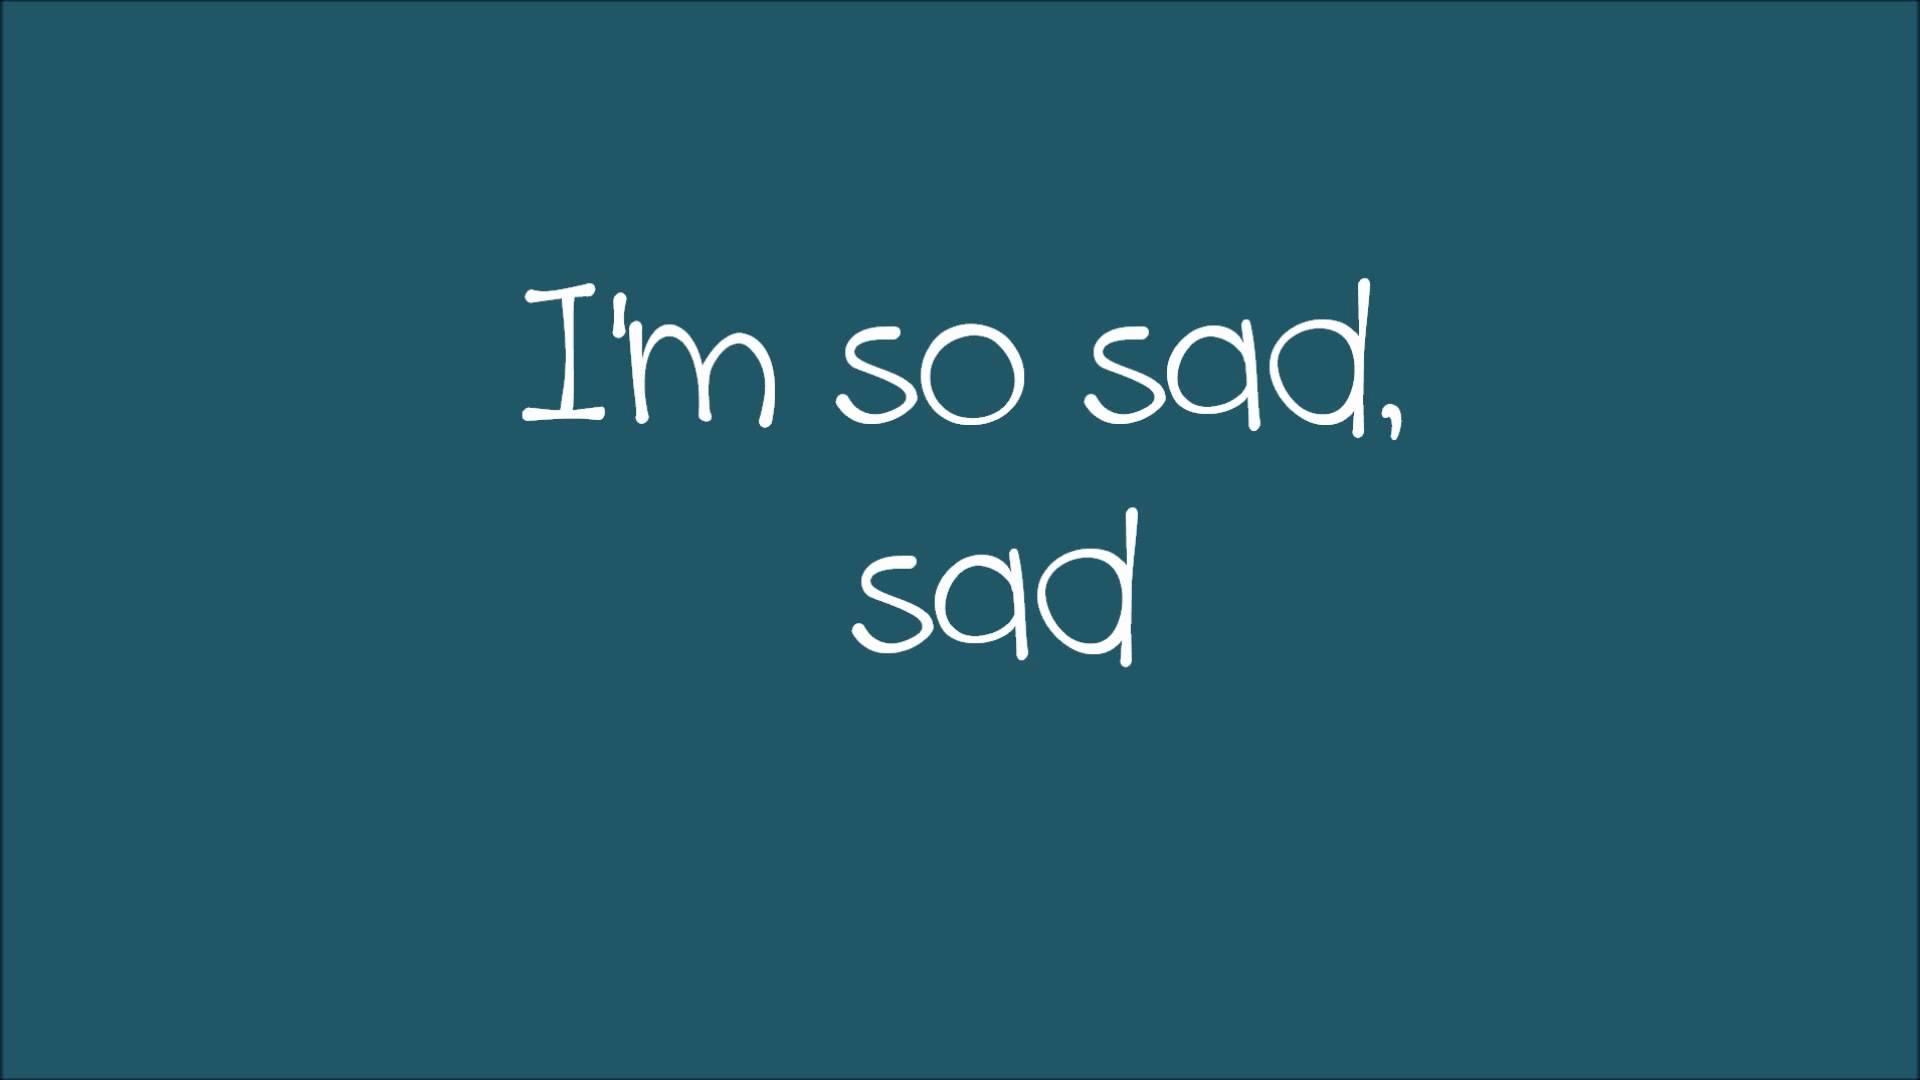 Sad name. One Sad. So Sad. Lyric Sad for Song. Life is sad